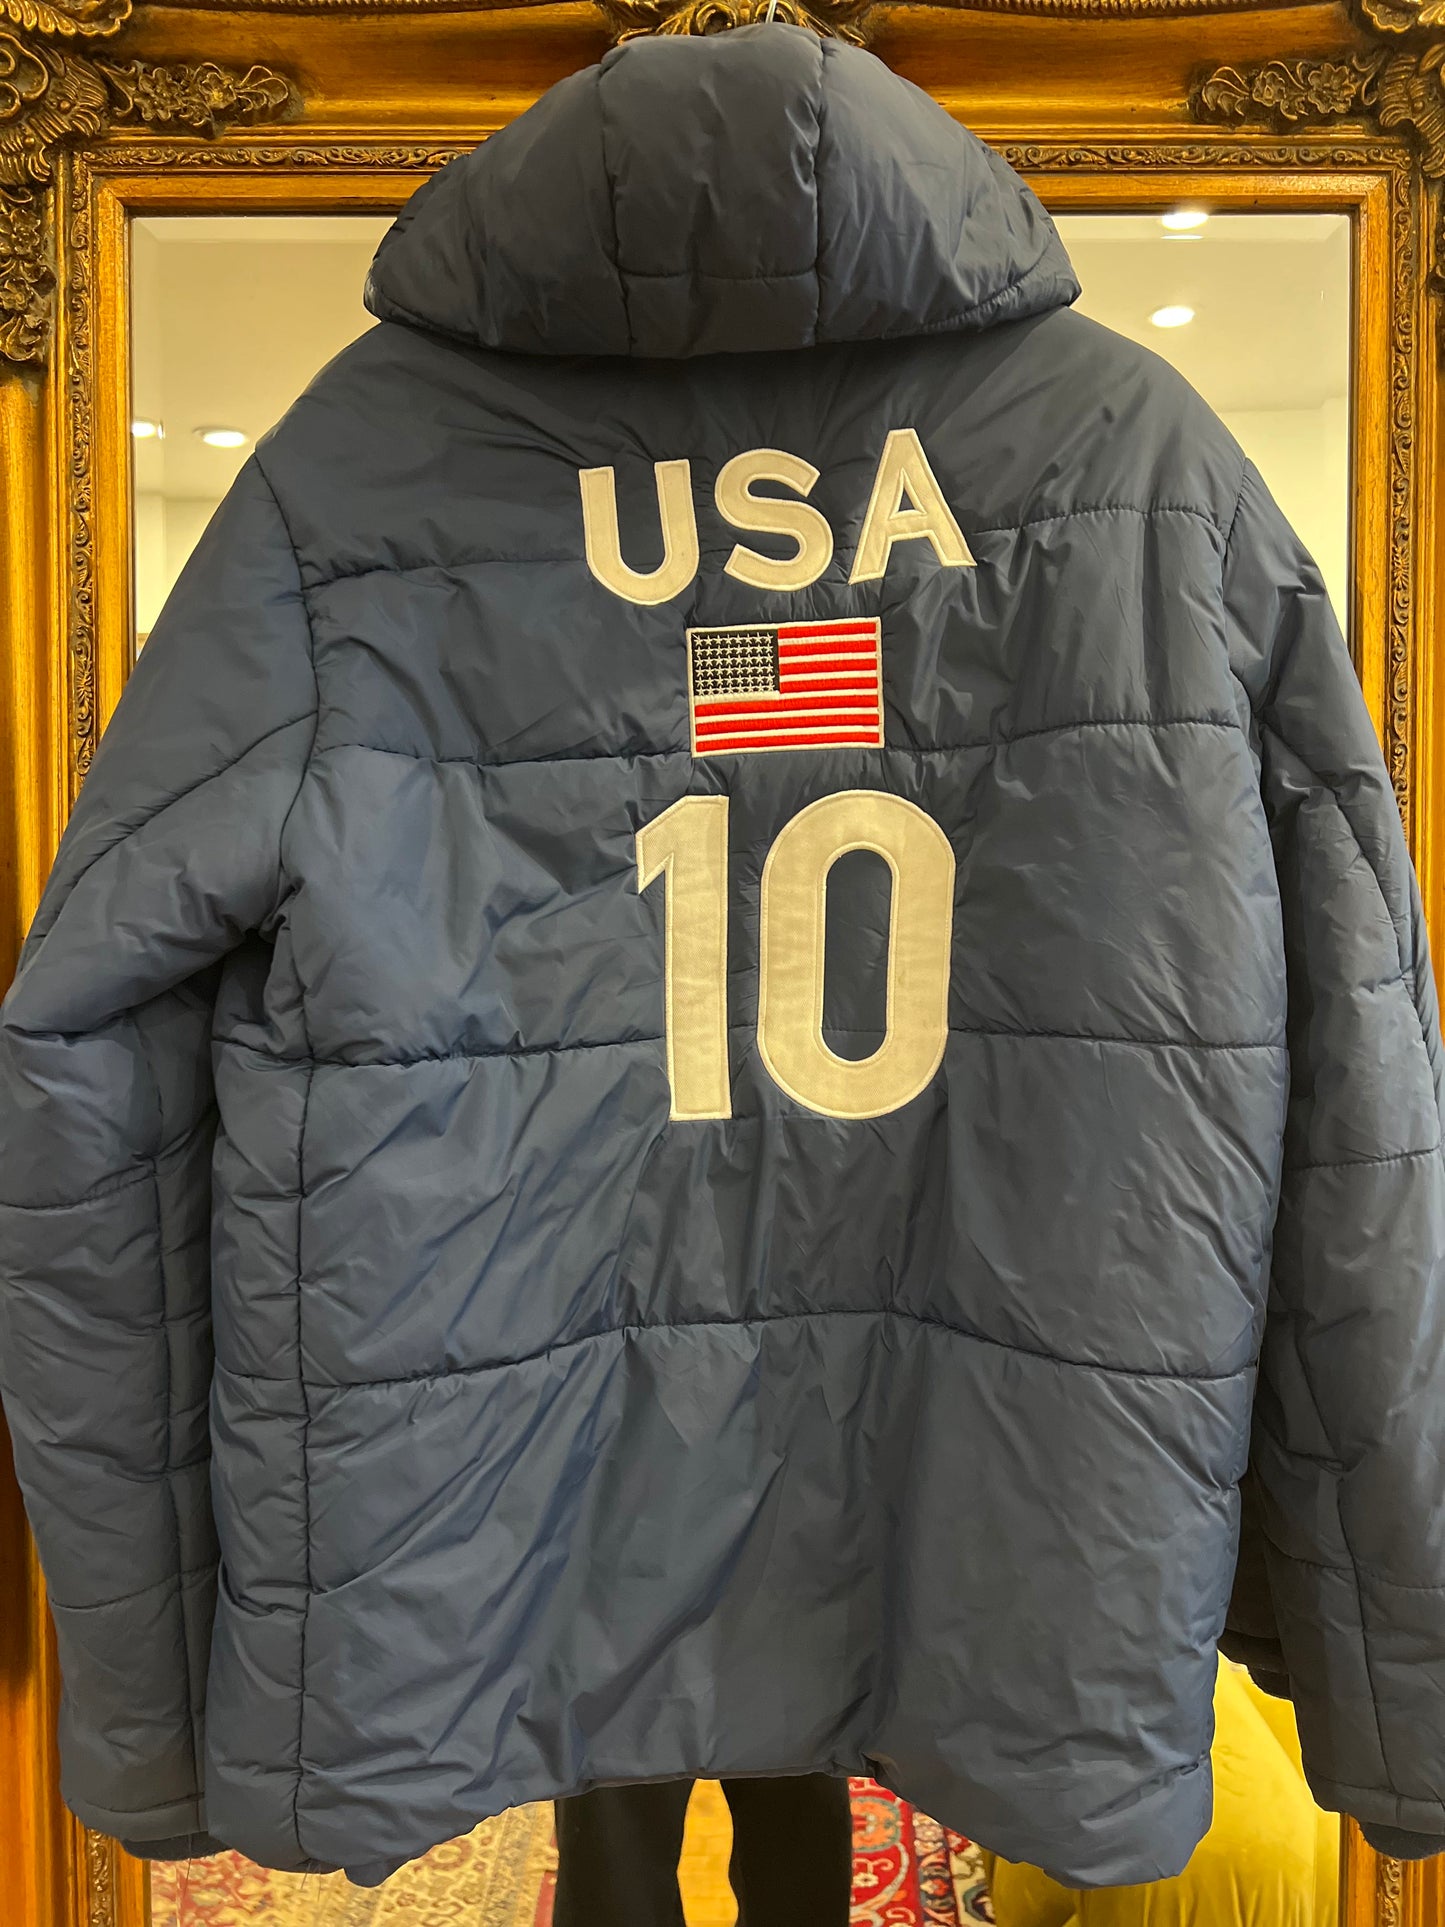 2010 Polo Ralph Lauren Winter Jacket (M)